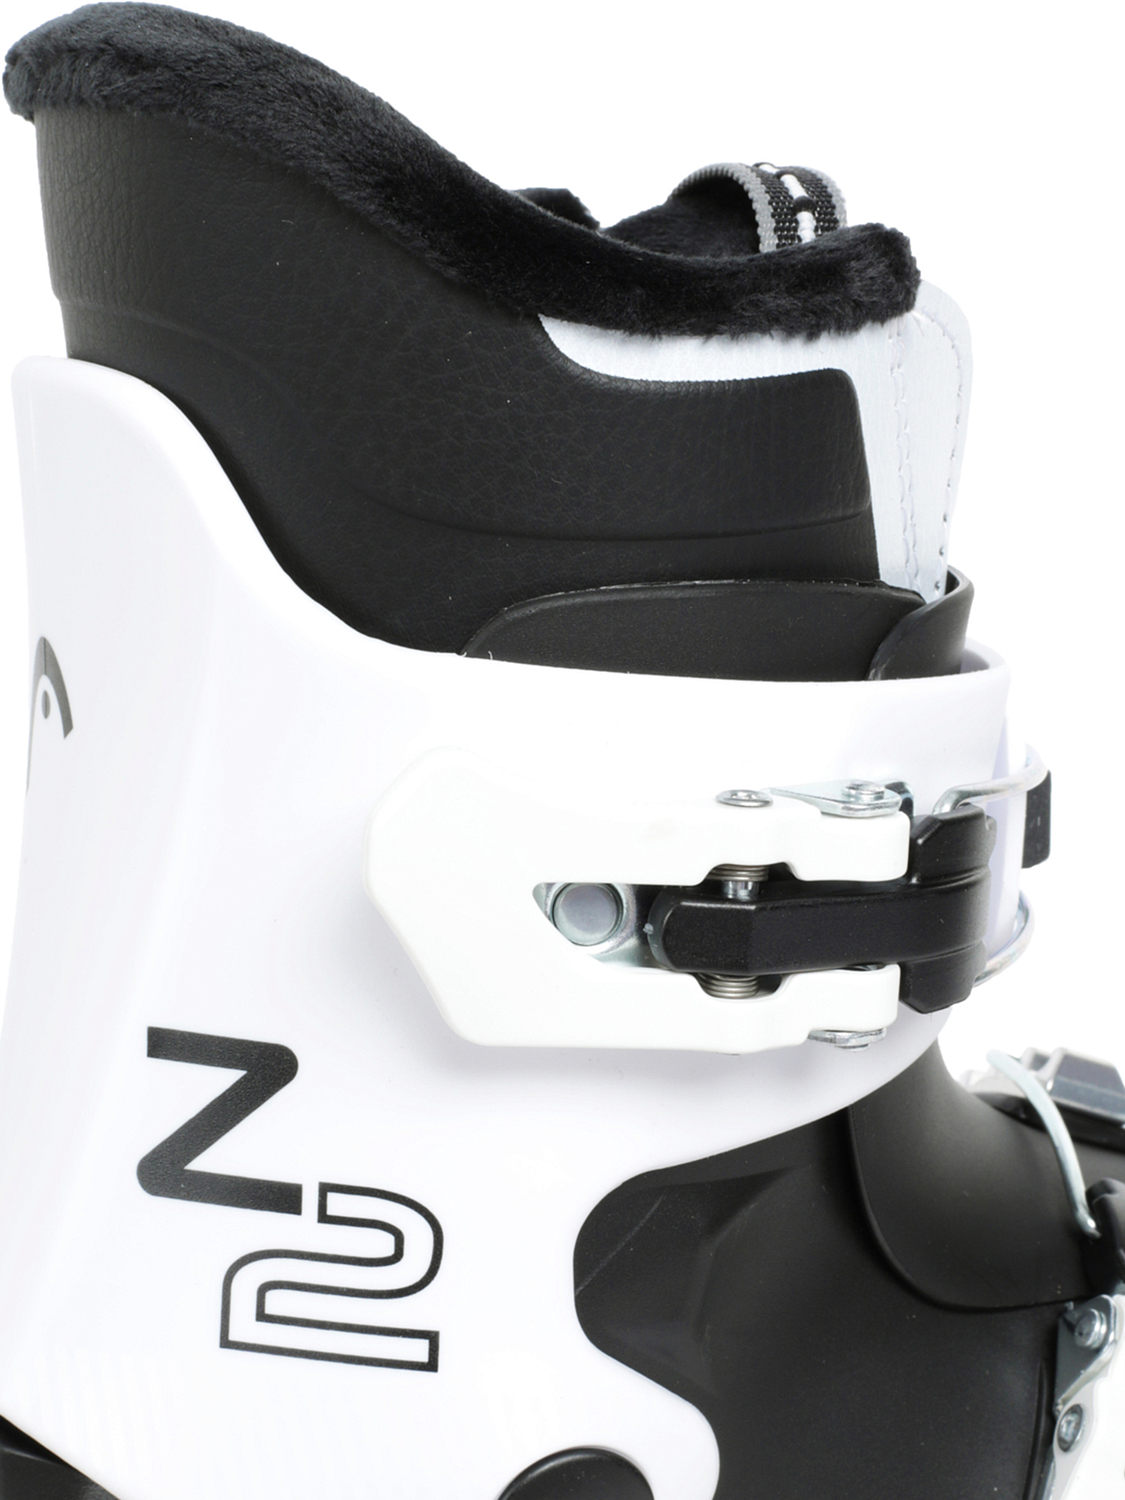 Горнолыжные ботинки HEAD Z 2 Black/White